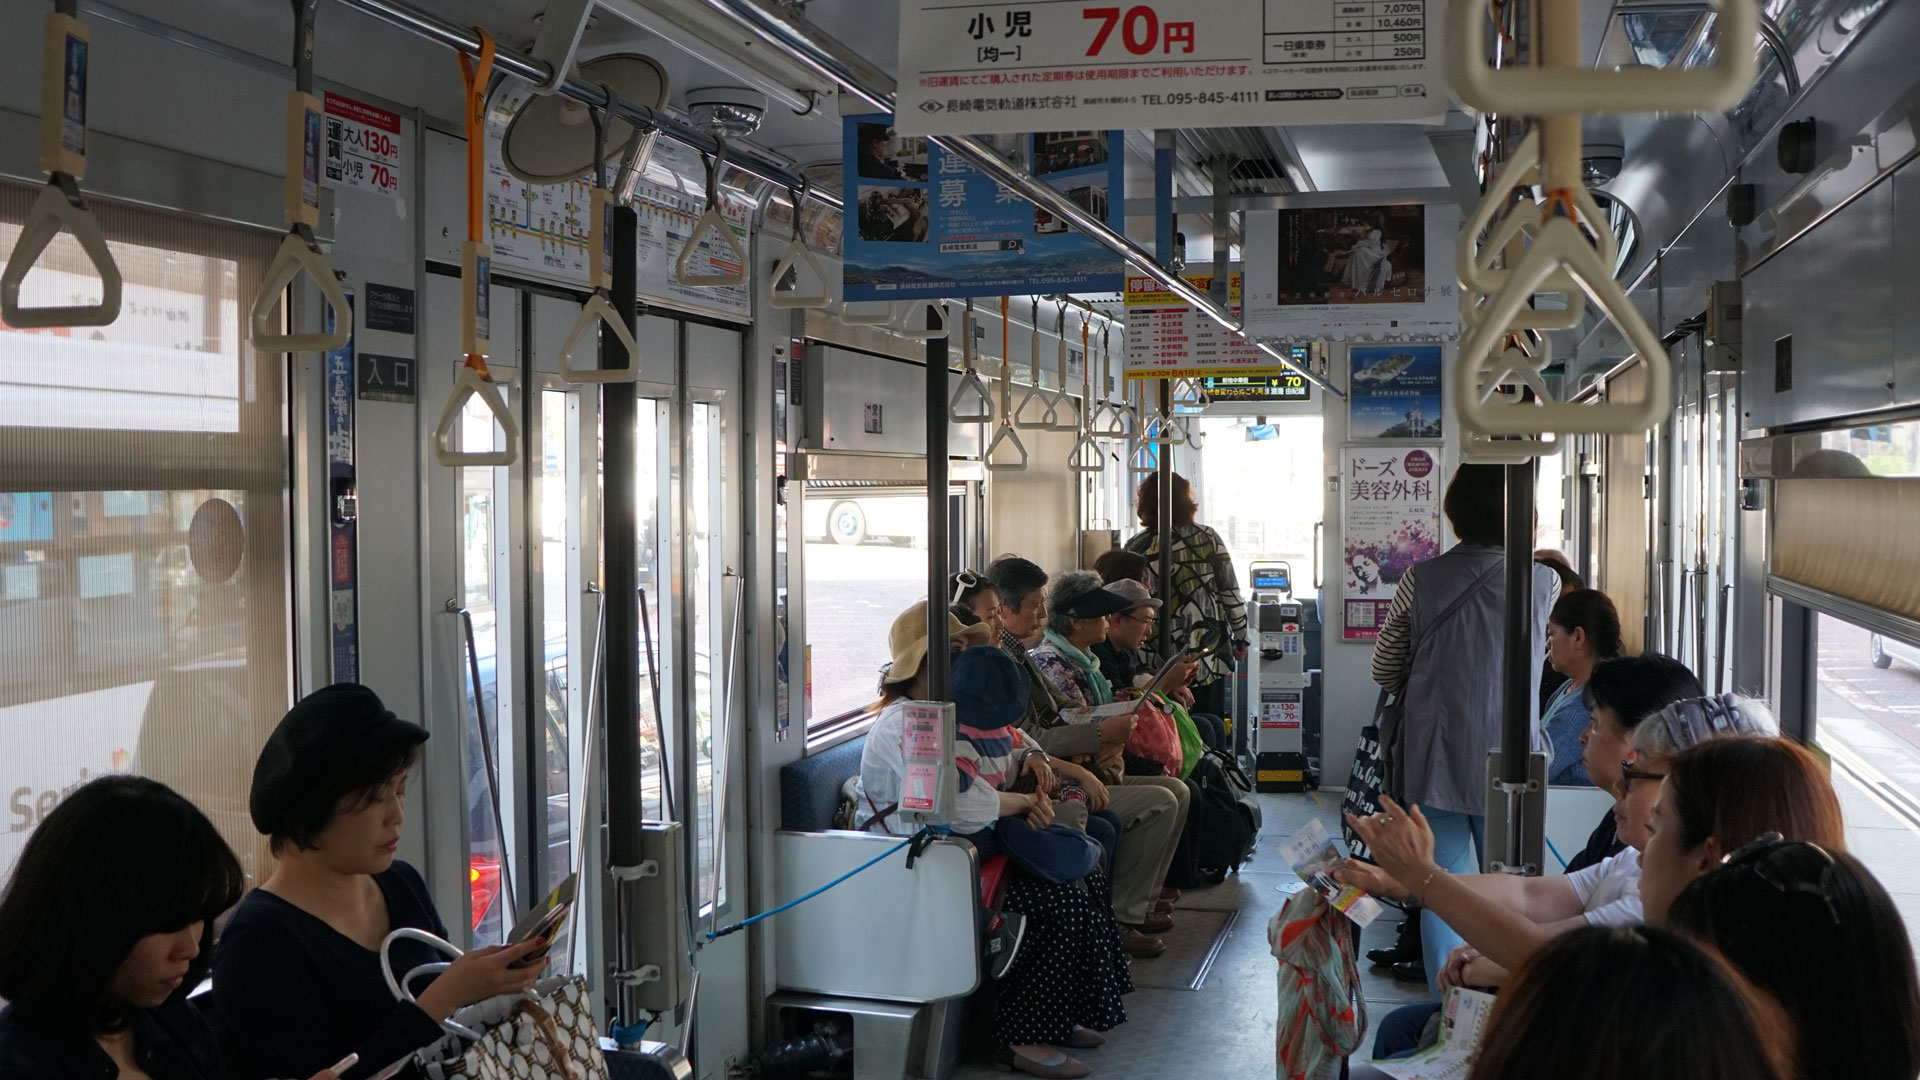 Inside Nagasaki Tram